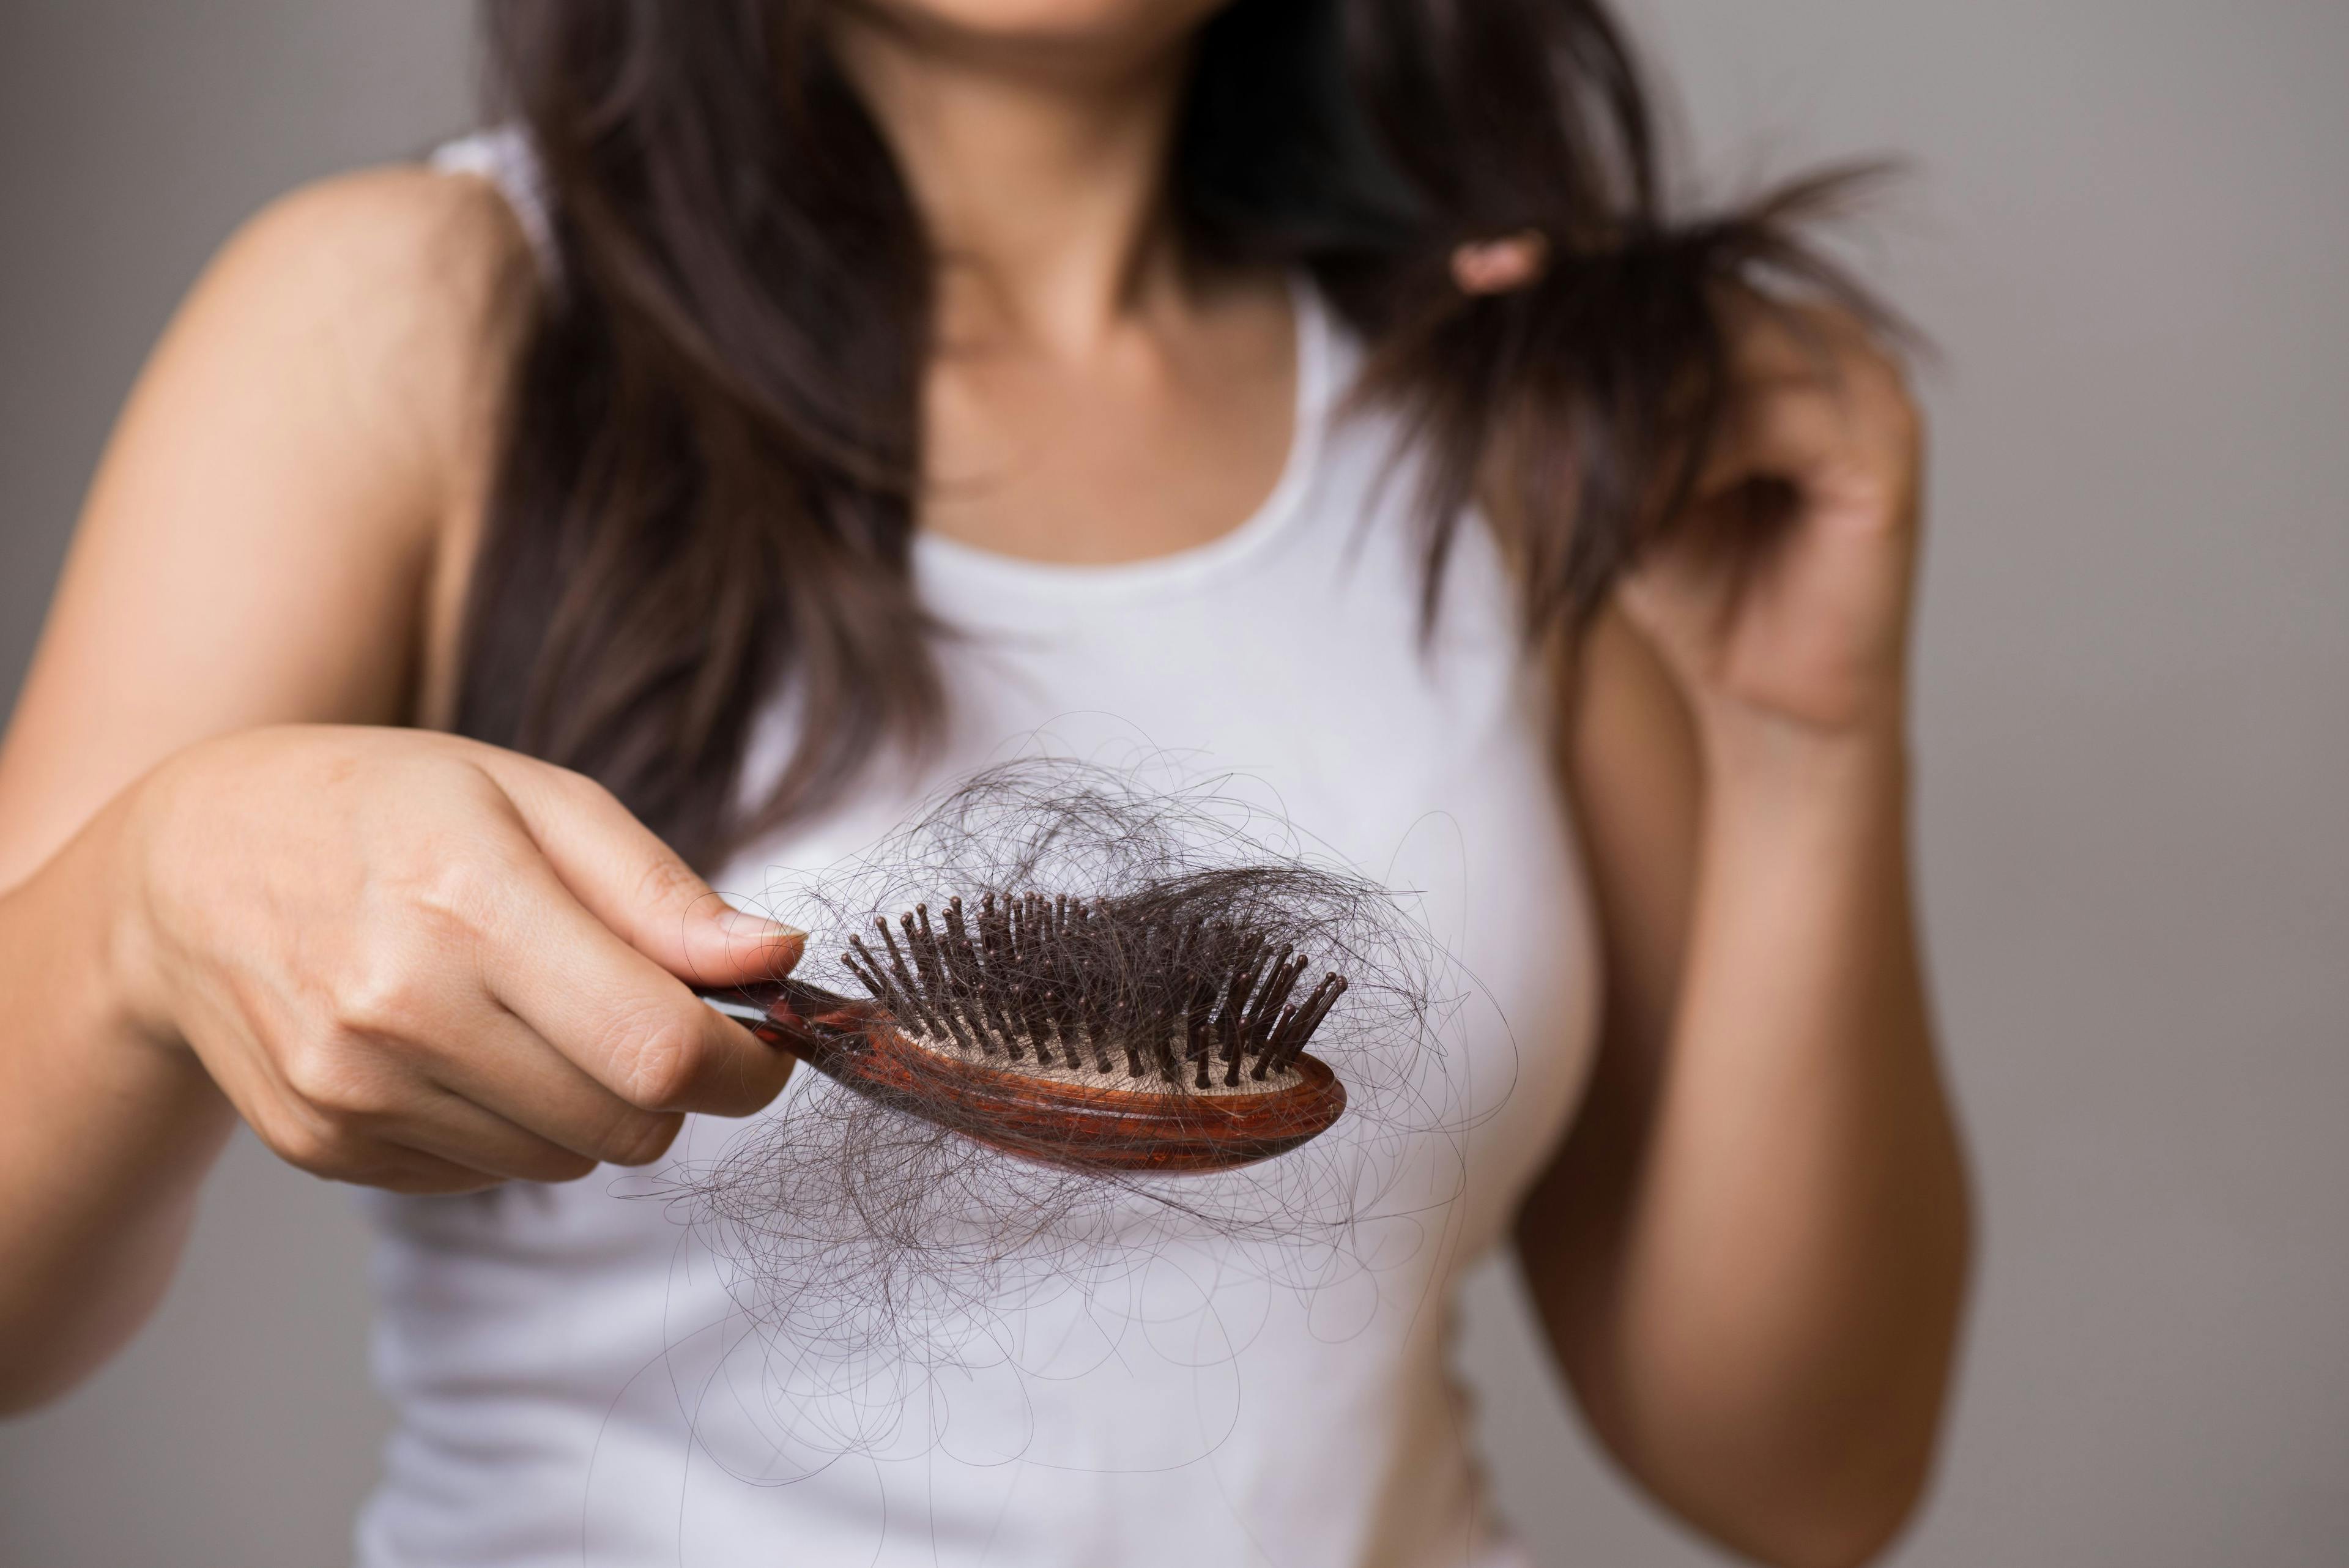 Woman experiences hair loss | Image Credit: Siam - stock.adobe.com